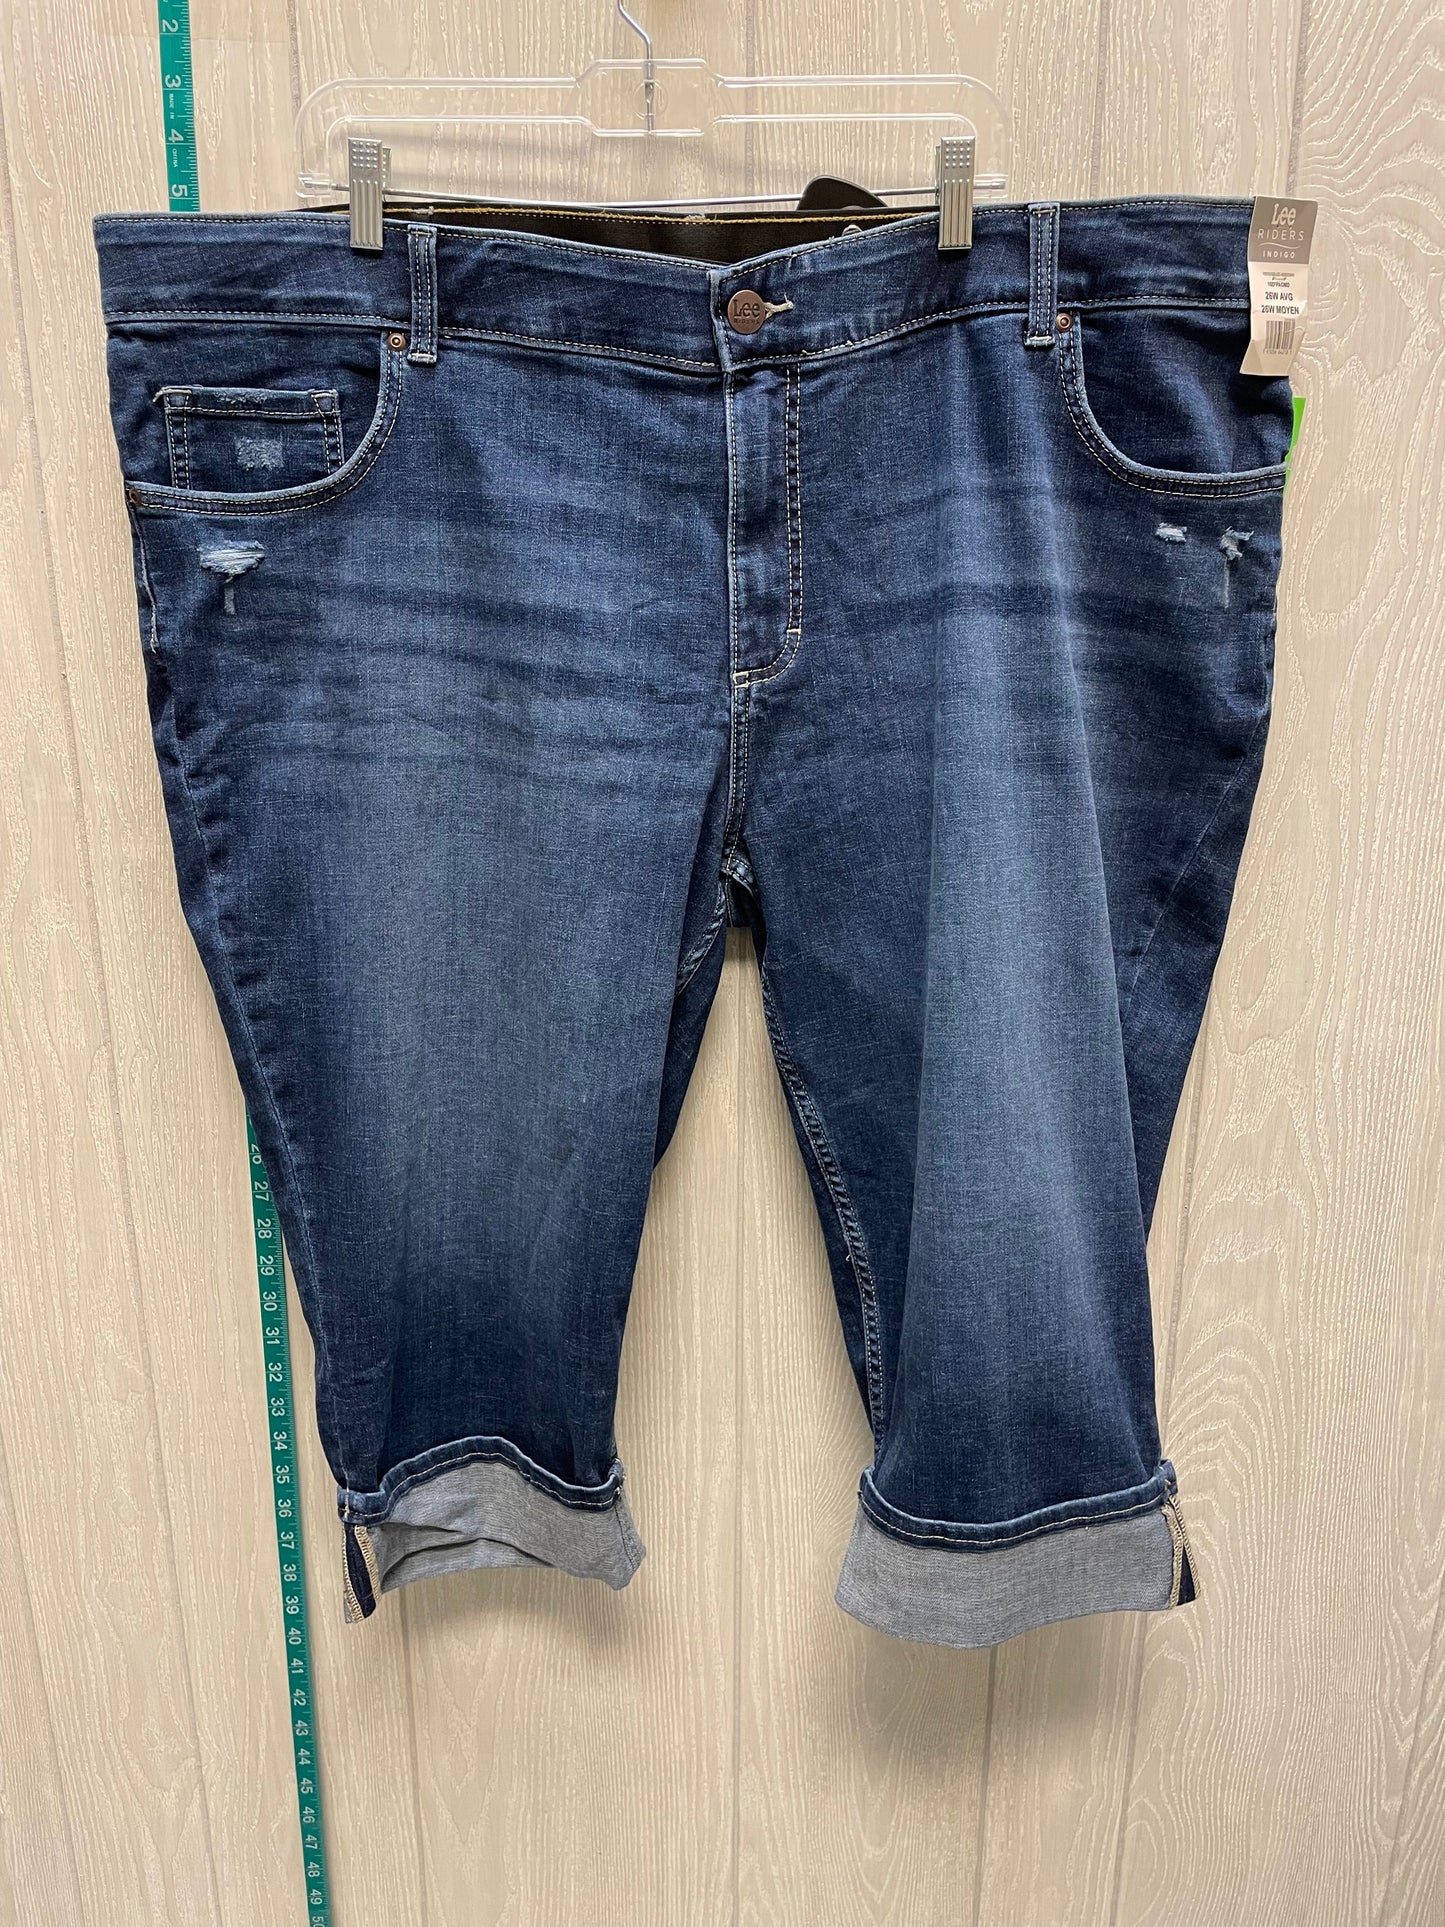 Blue Denim Jeans Boot Cut Torrid, Size 18